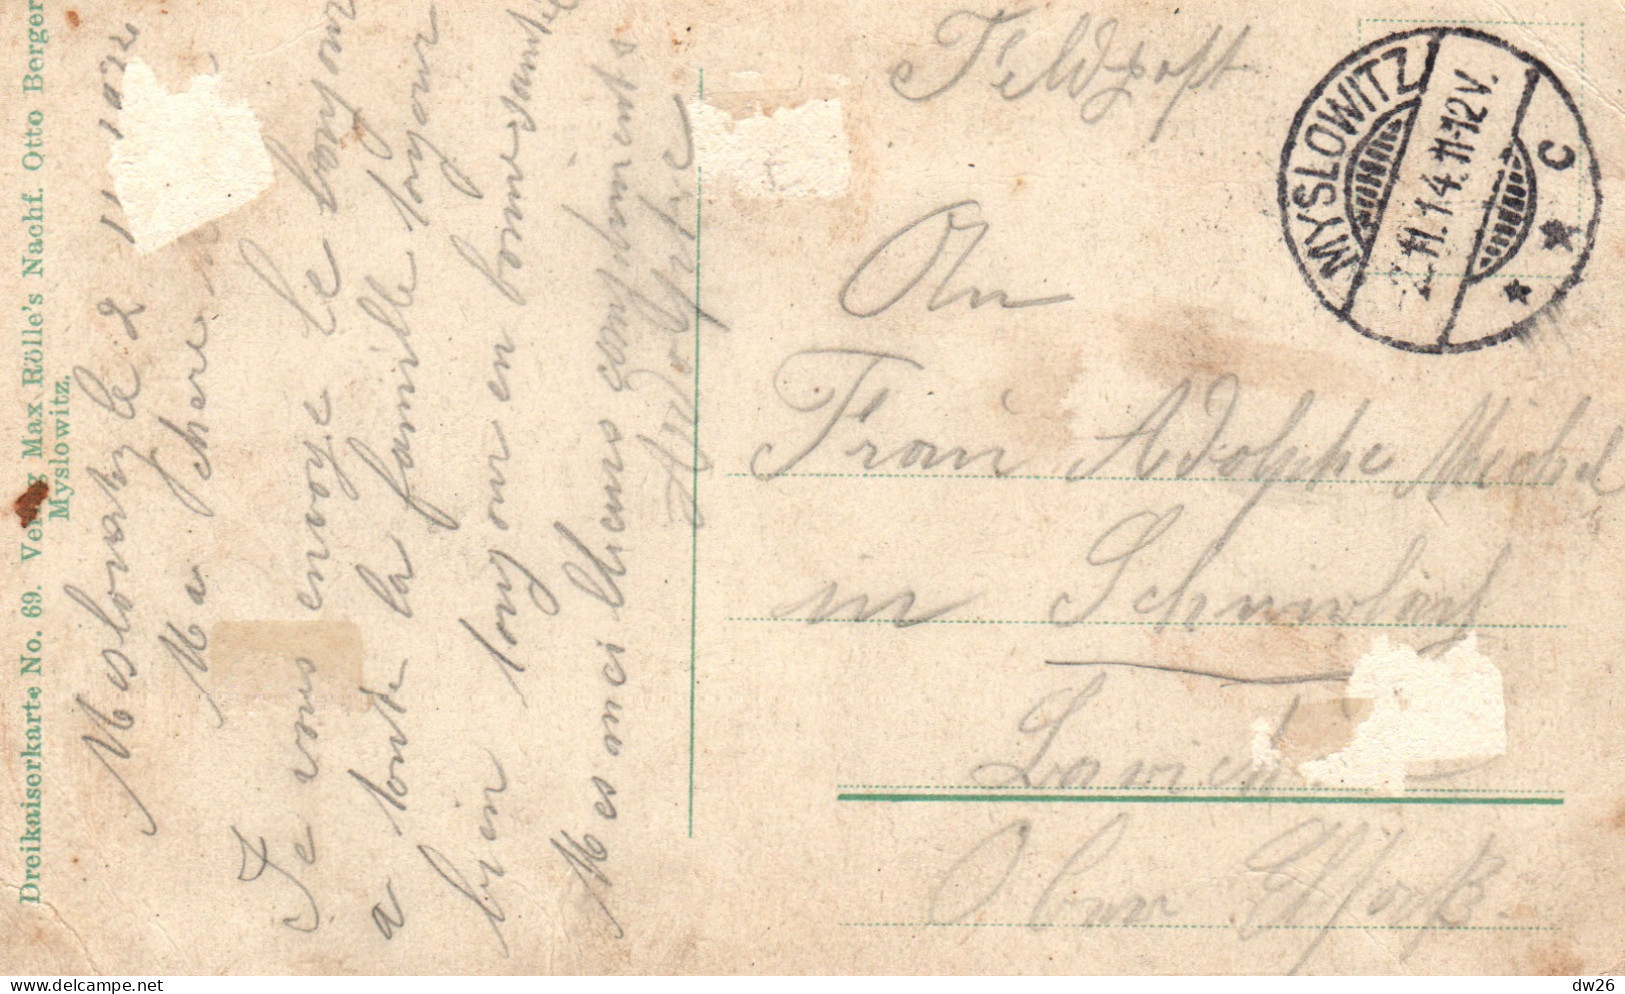 Représentation De Timbres: Stamps Deutschland, Russland, Osterreich, Bismarckturm - Lithographie 1914 - Postzegels (afbeeldingen)